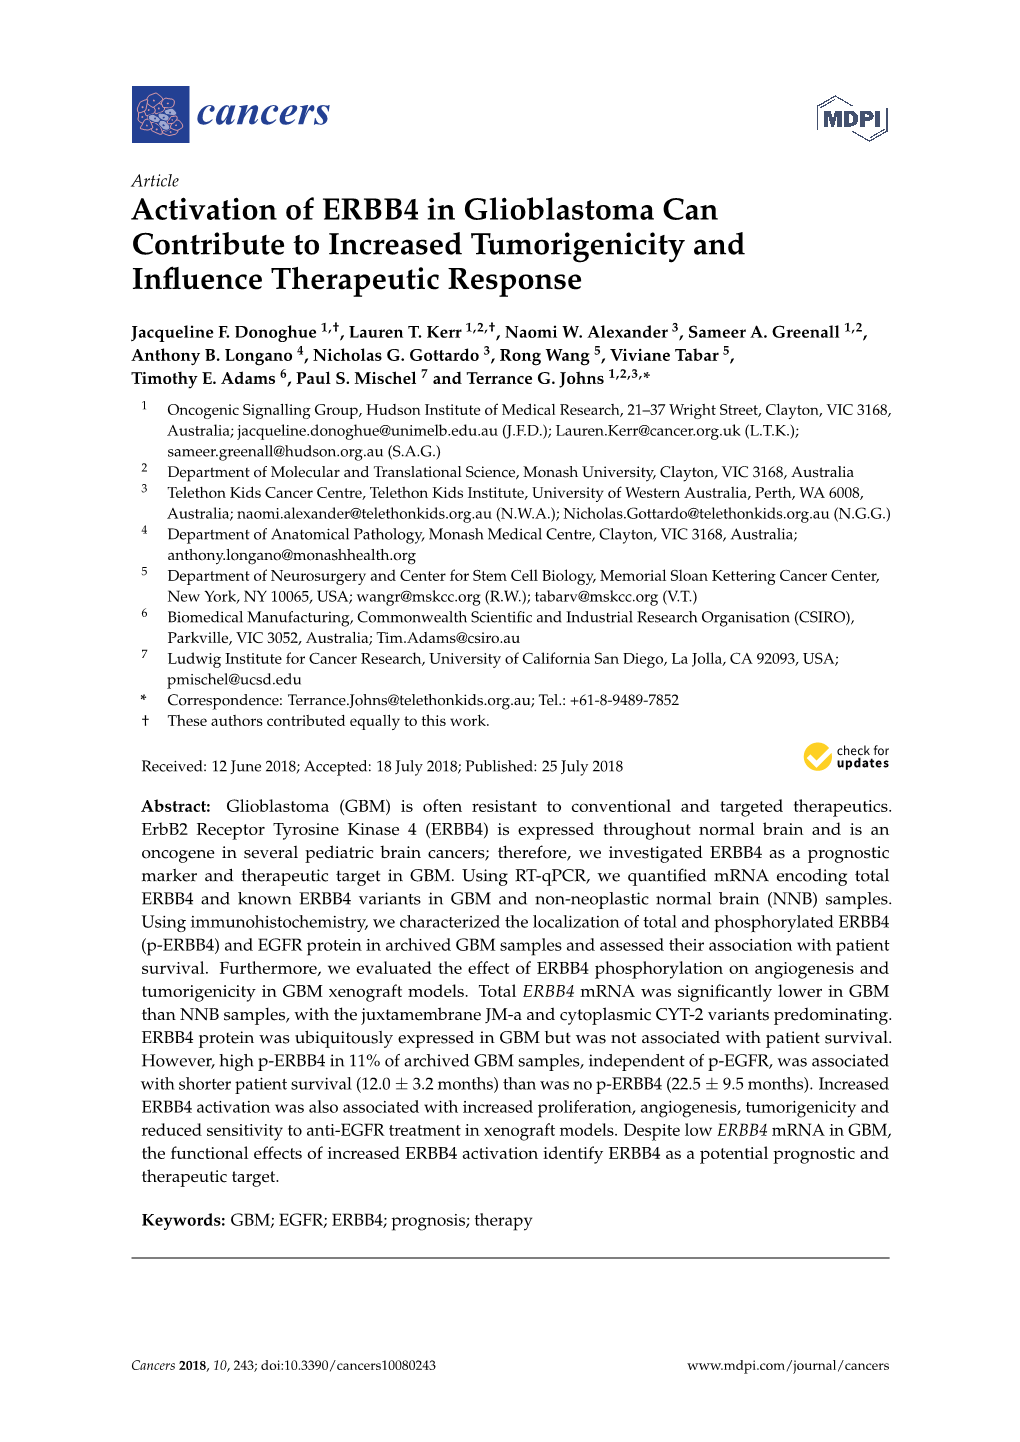 Activation of ERBB4 in Glioblastoma Can Contribute to Increased Tumorigenicity and Inﬂuence Therapeutic Response